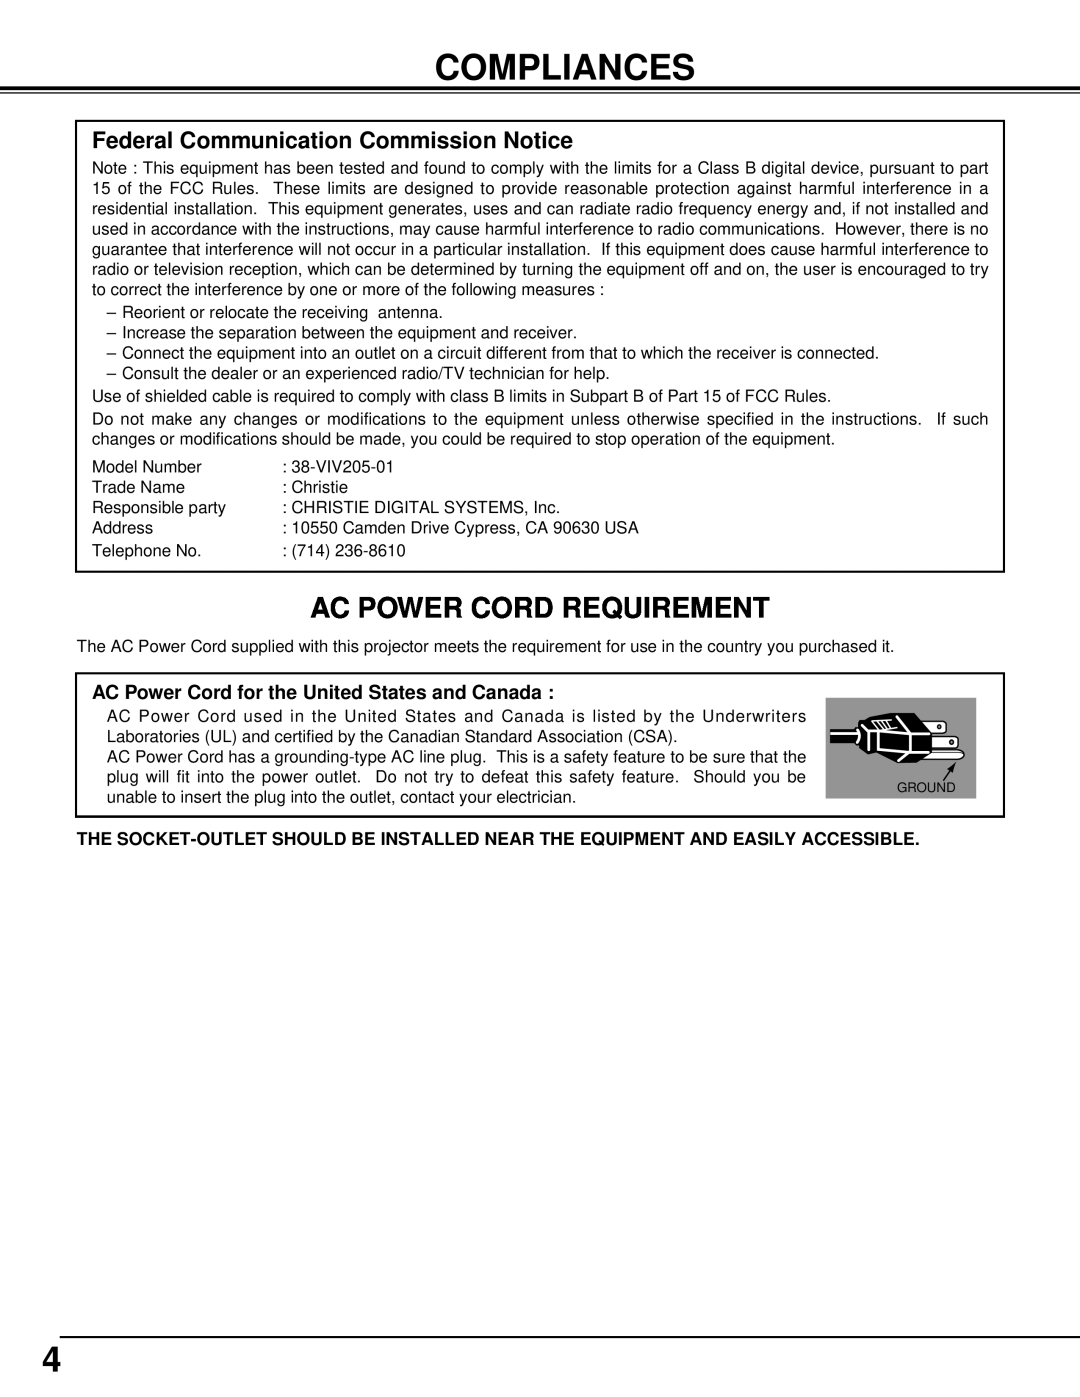 Christie Digital Systems 38-VIV205-01 Compliances, Ac Power Cord Requirement, Federal Communication Commission Notice 